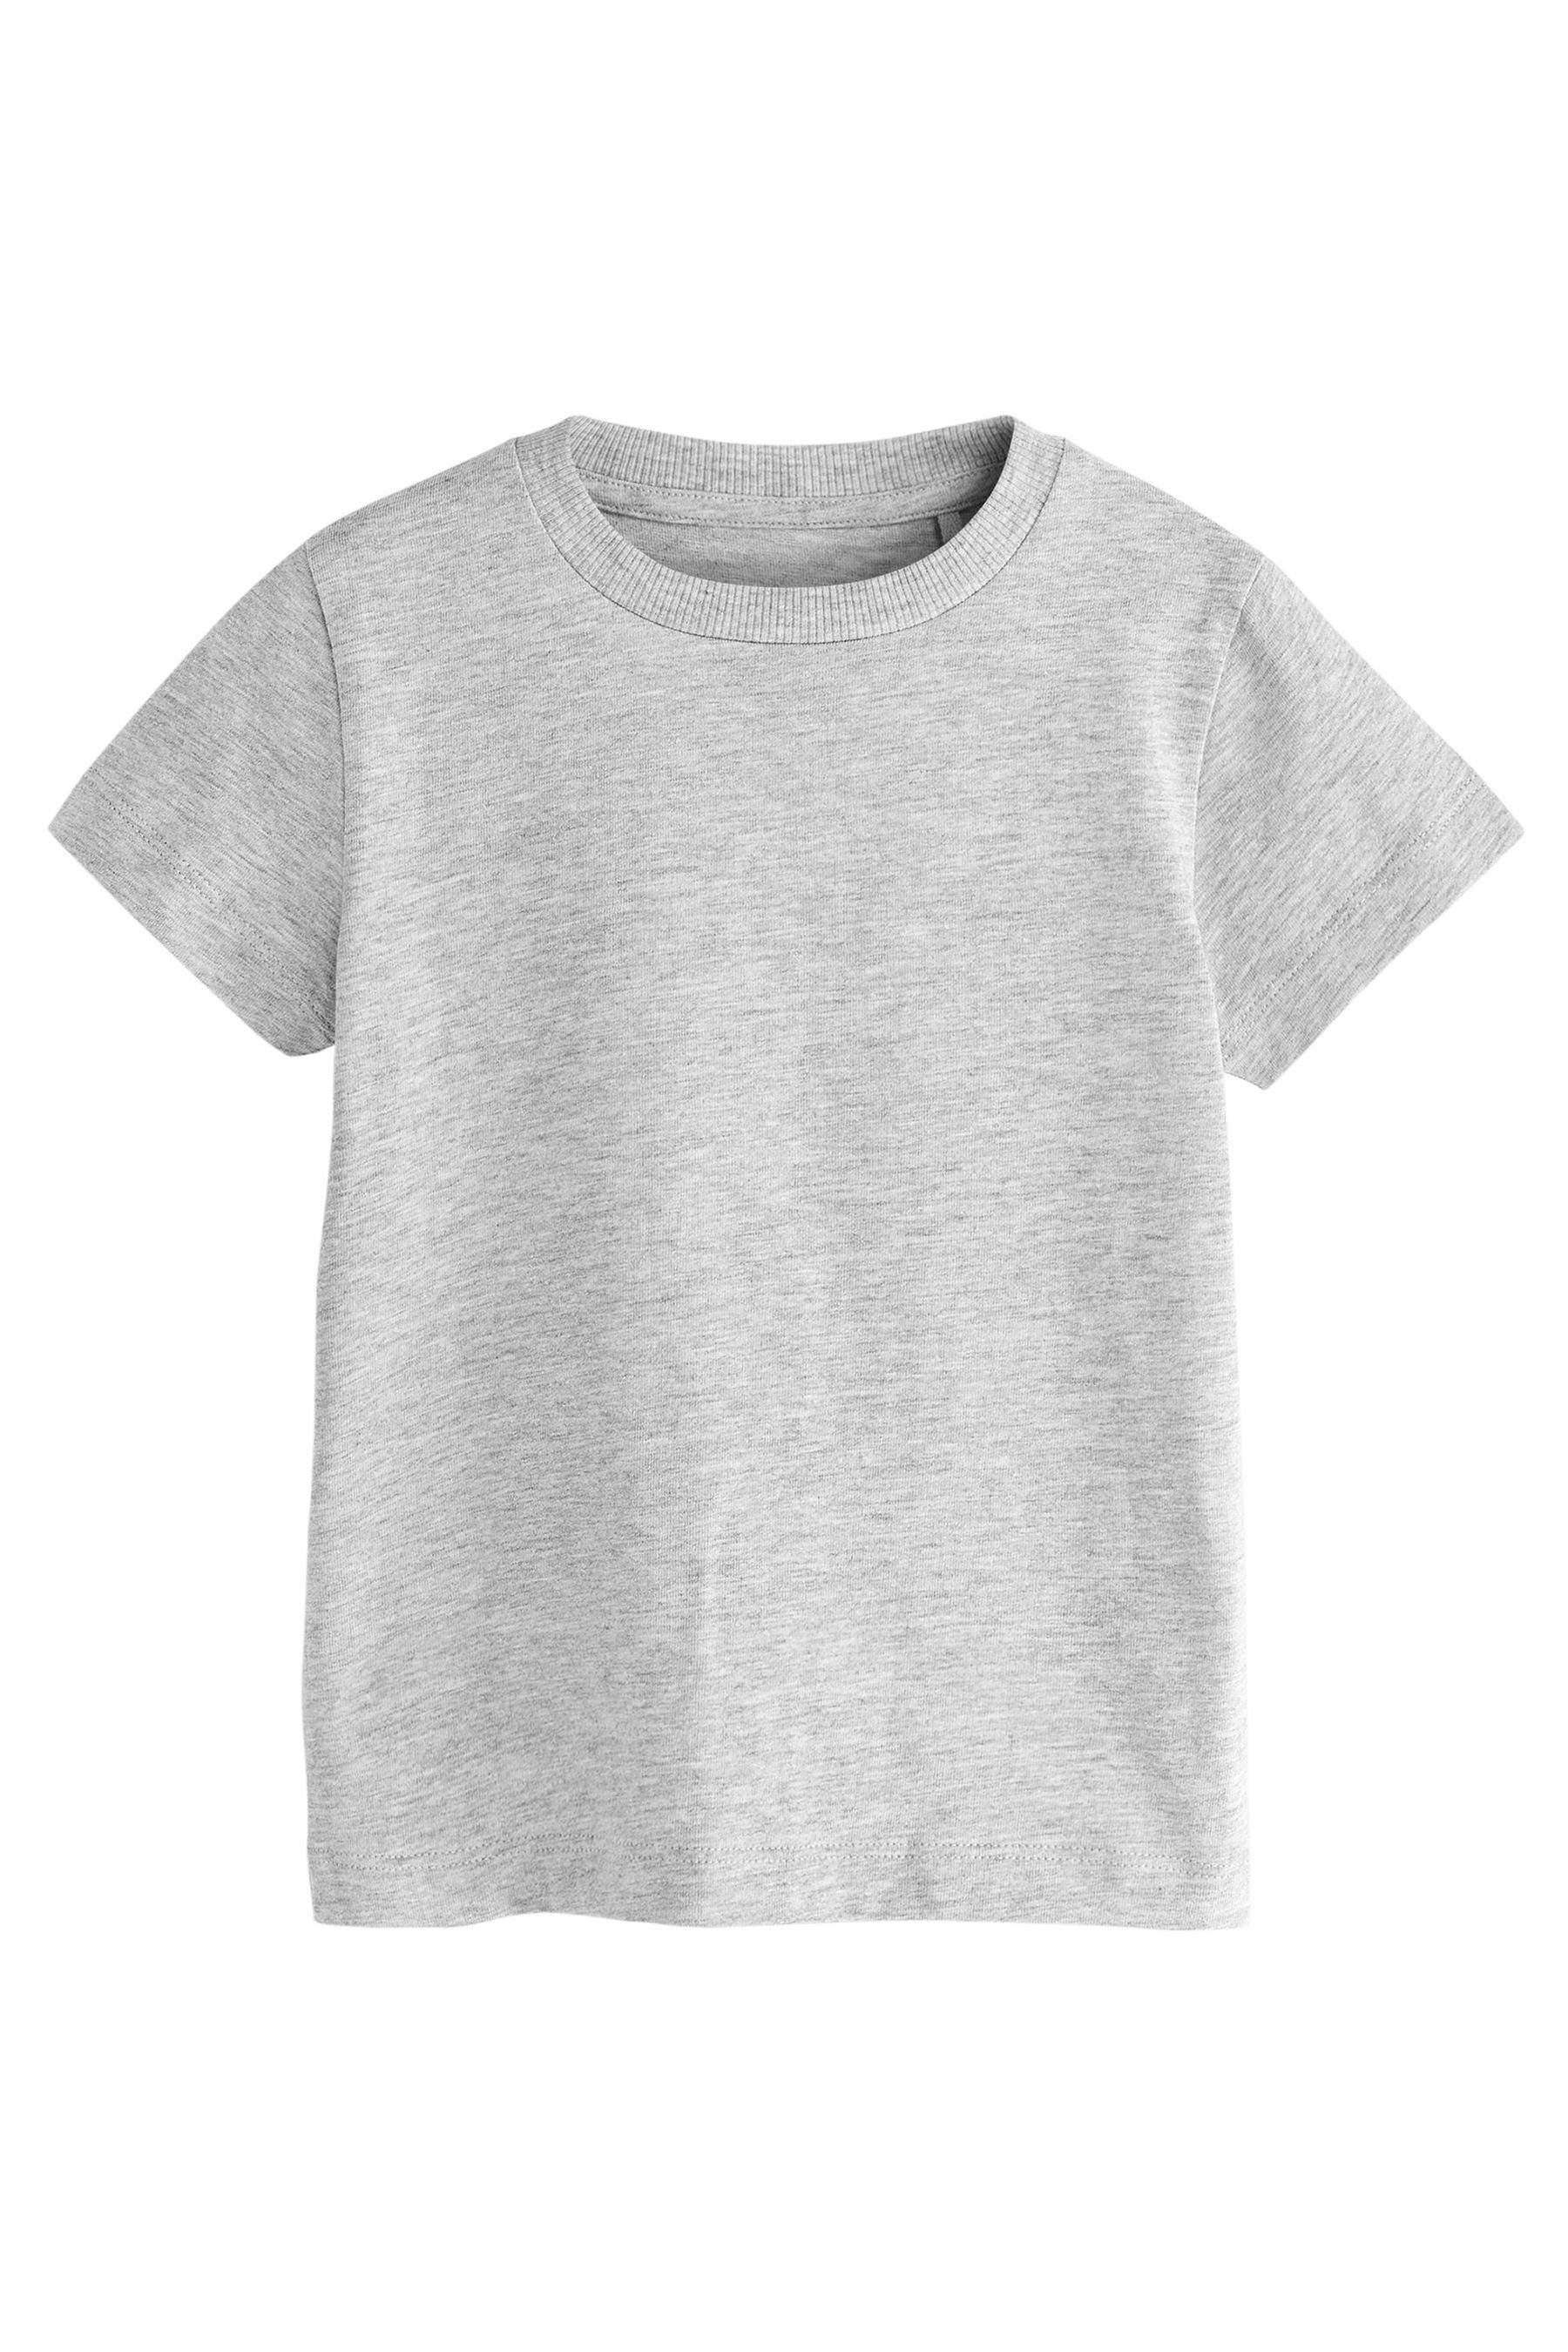 Next T-Shirt Kurzärmelige Black/White 3er-Pack (3-tlg) Figurenmotiv, mit T-Shirts Slogan